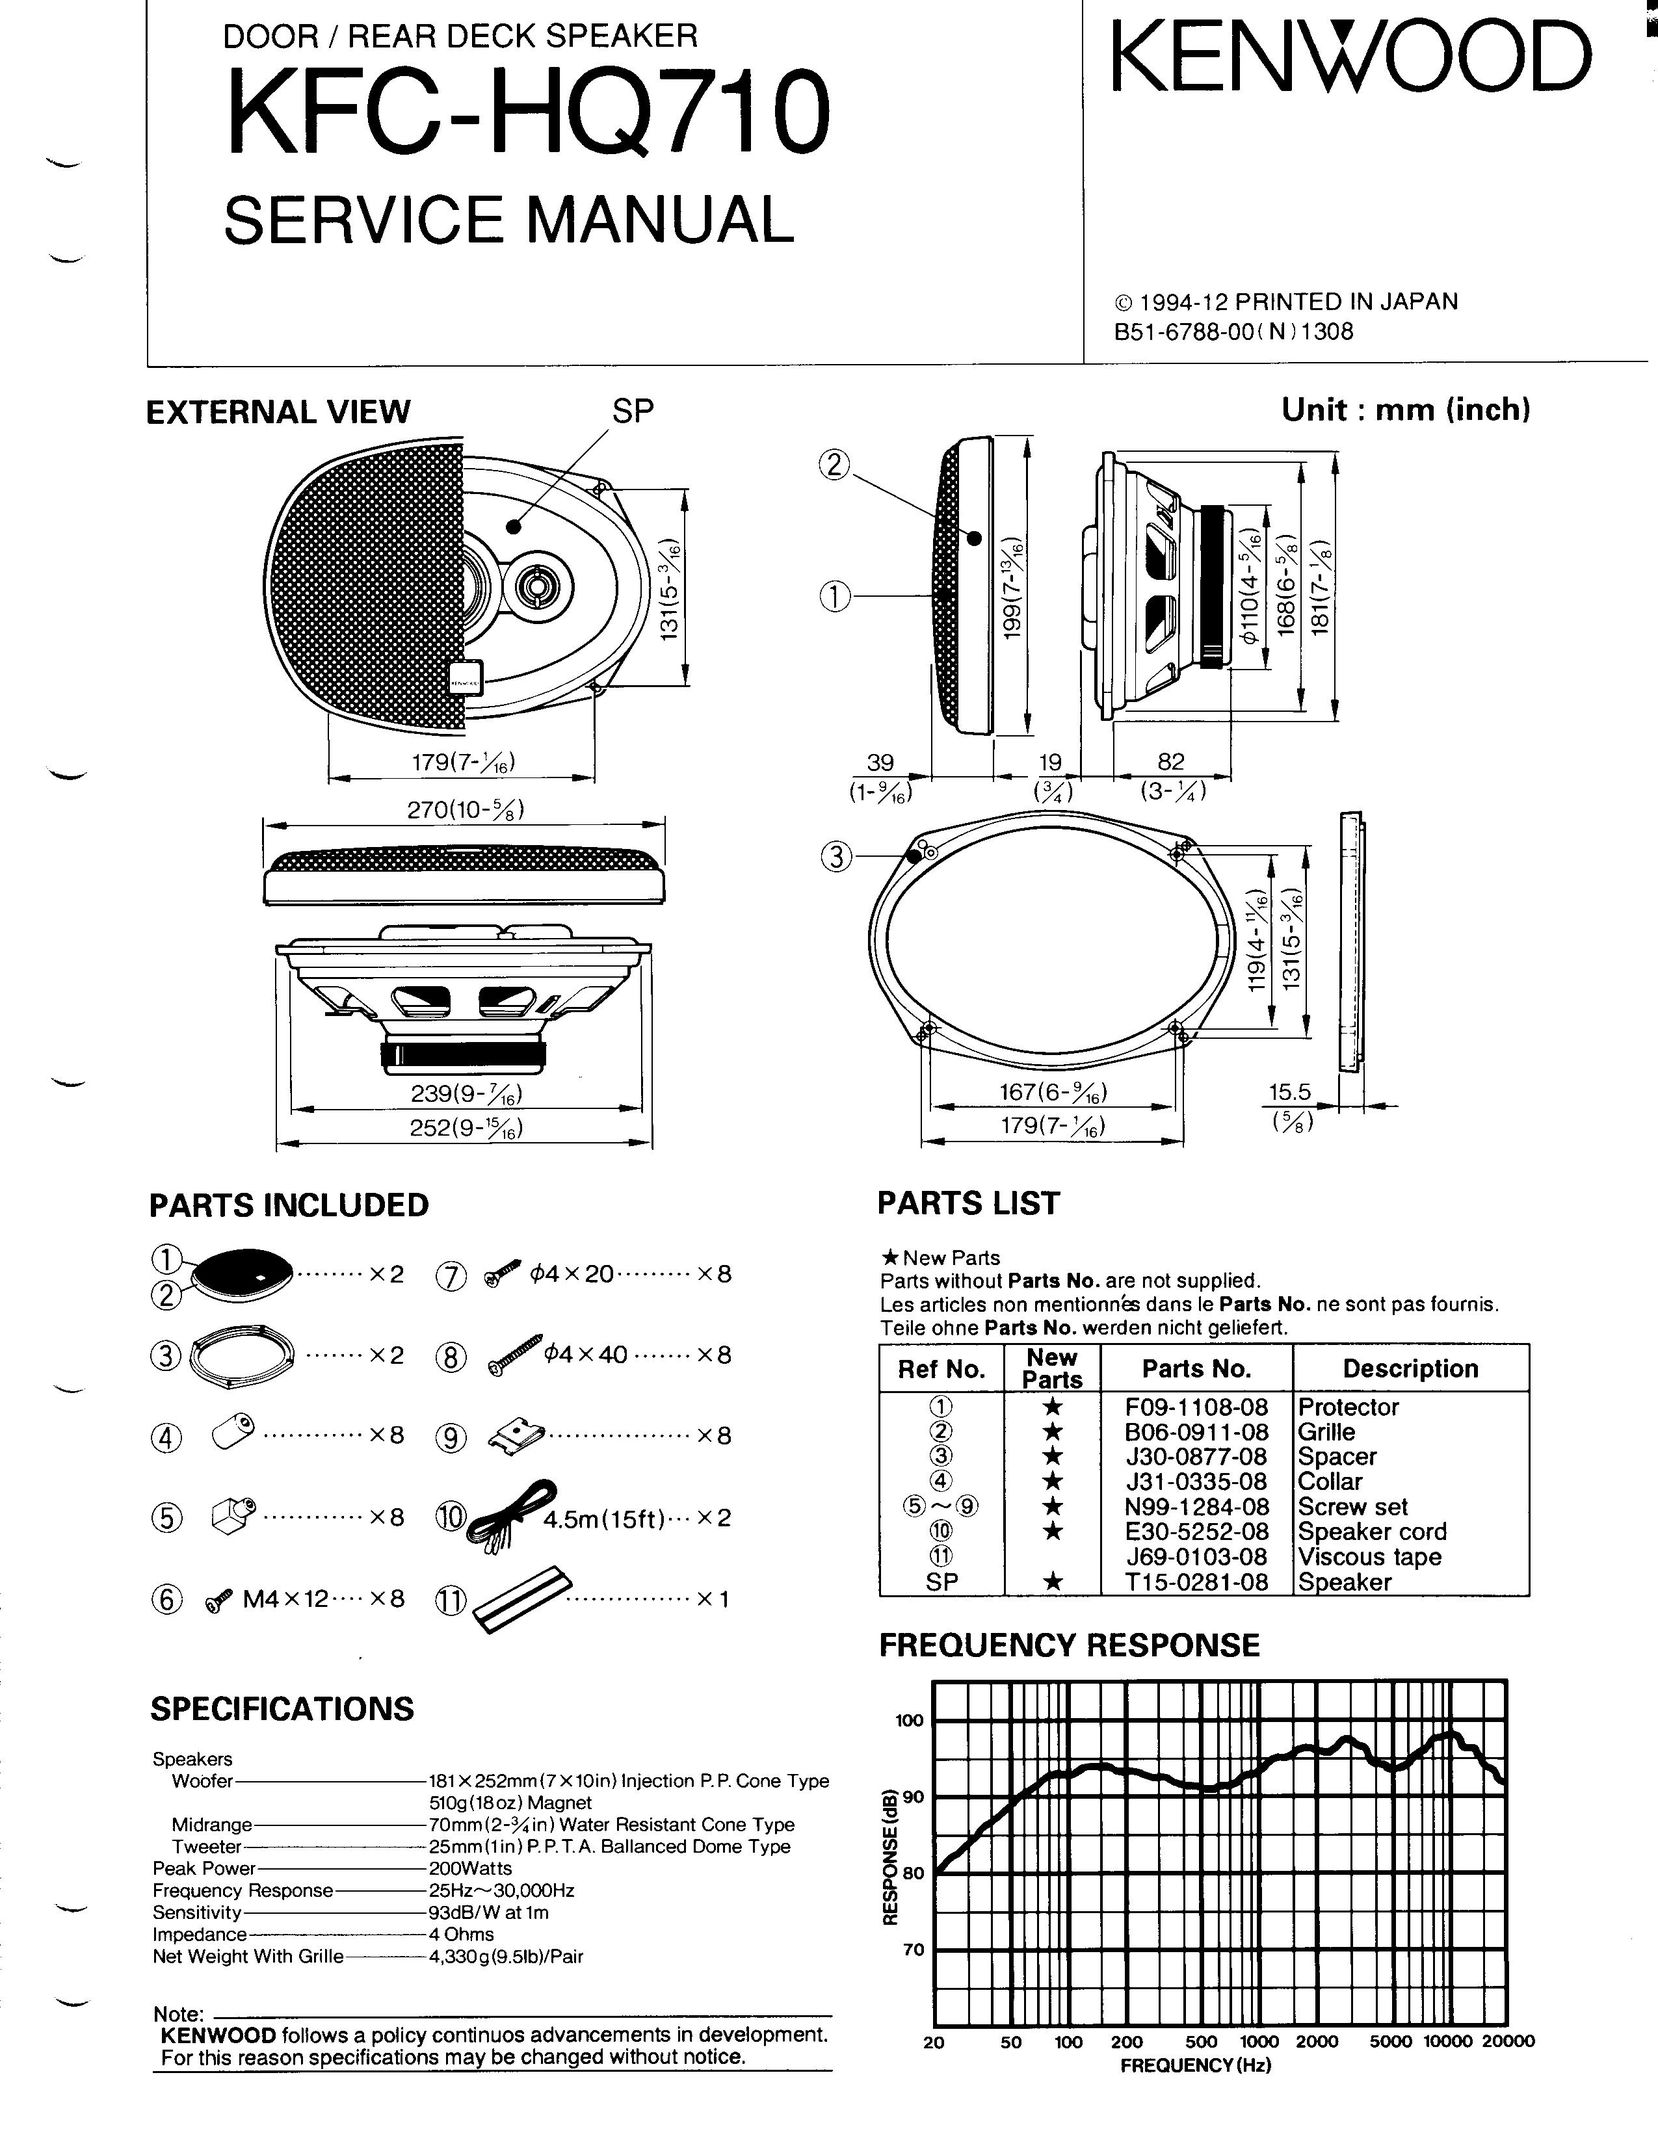 Kenwood KFC-HQ710 Car Speaker User Manual (Page 1)